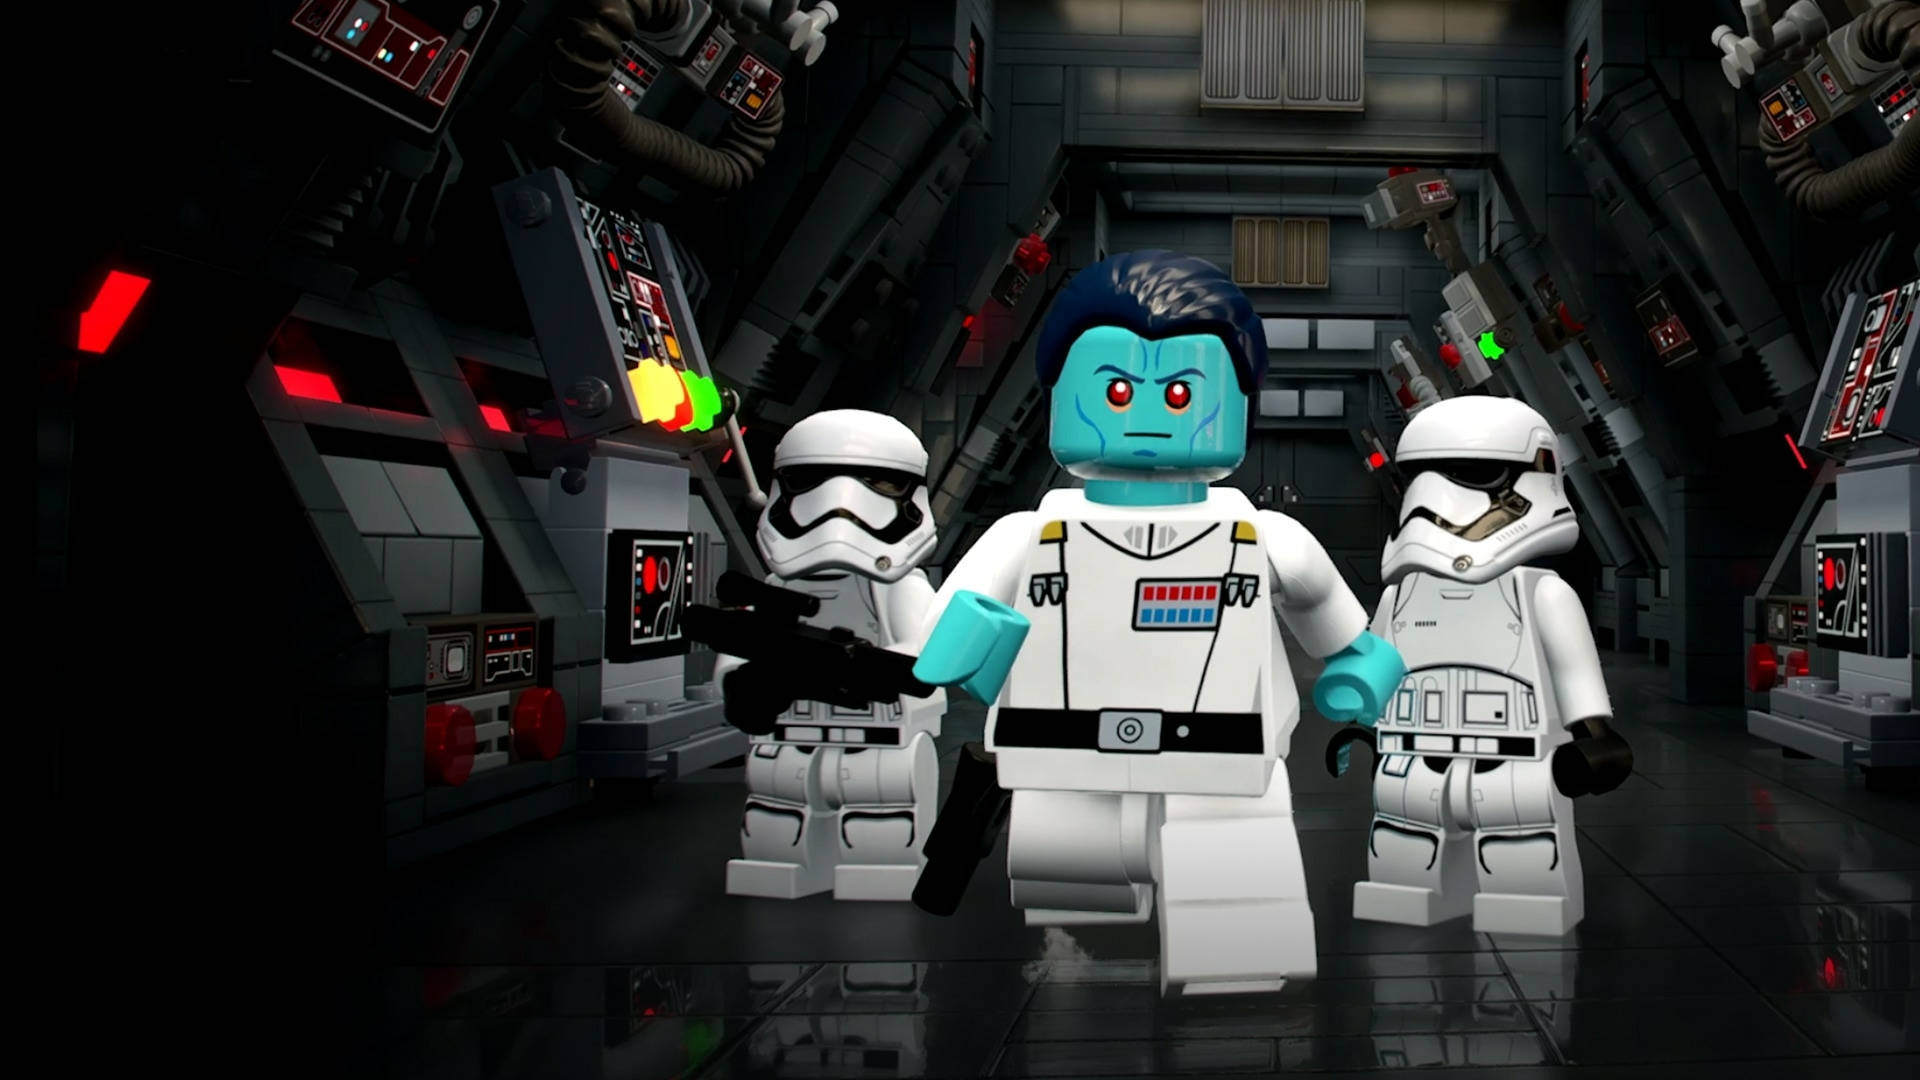 Lego Star Wars - The Force Awakens Wallpaper